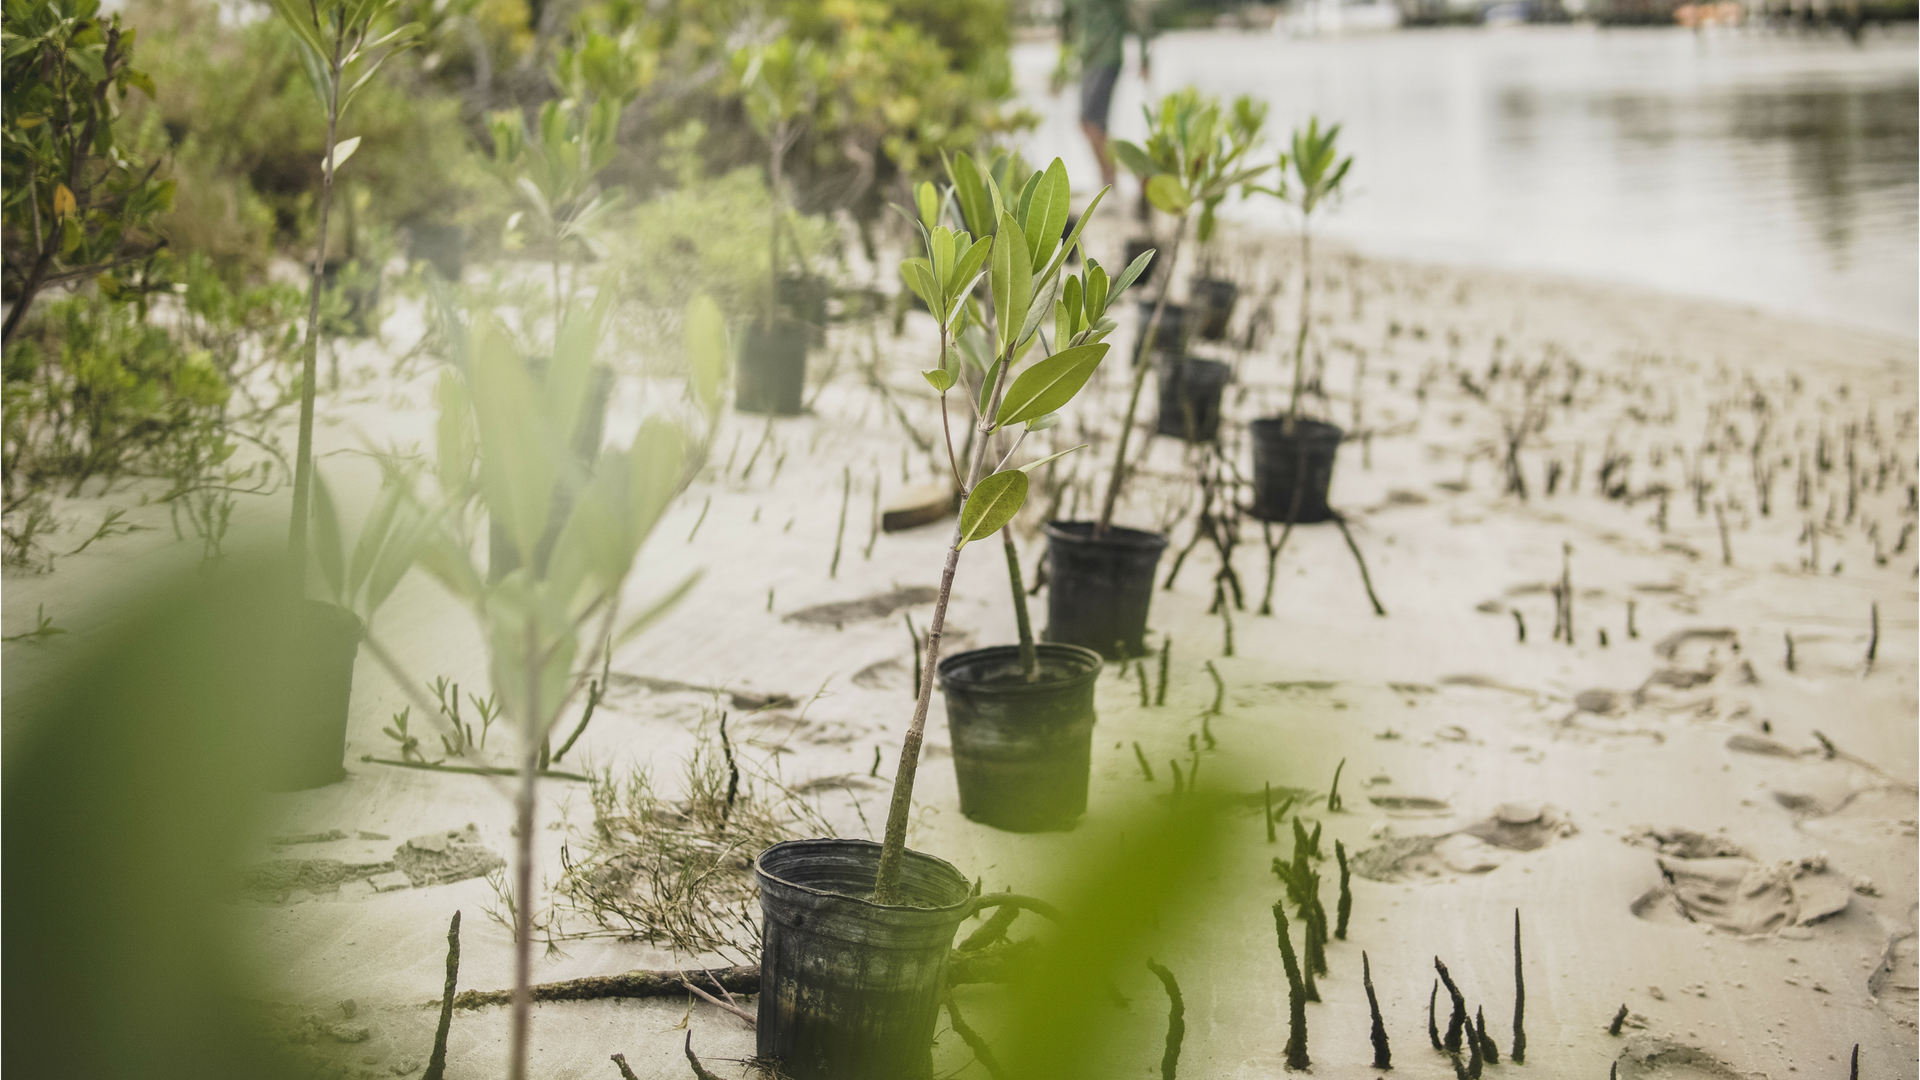 Mangrove seedlings in planting pots sitting alongside the Florida waters